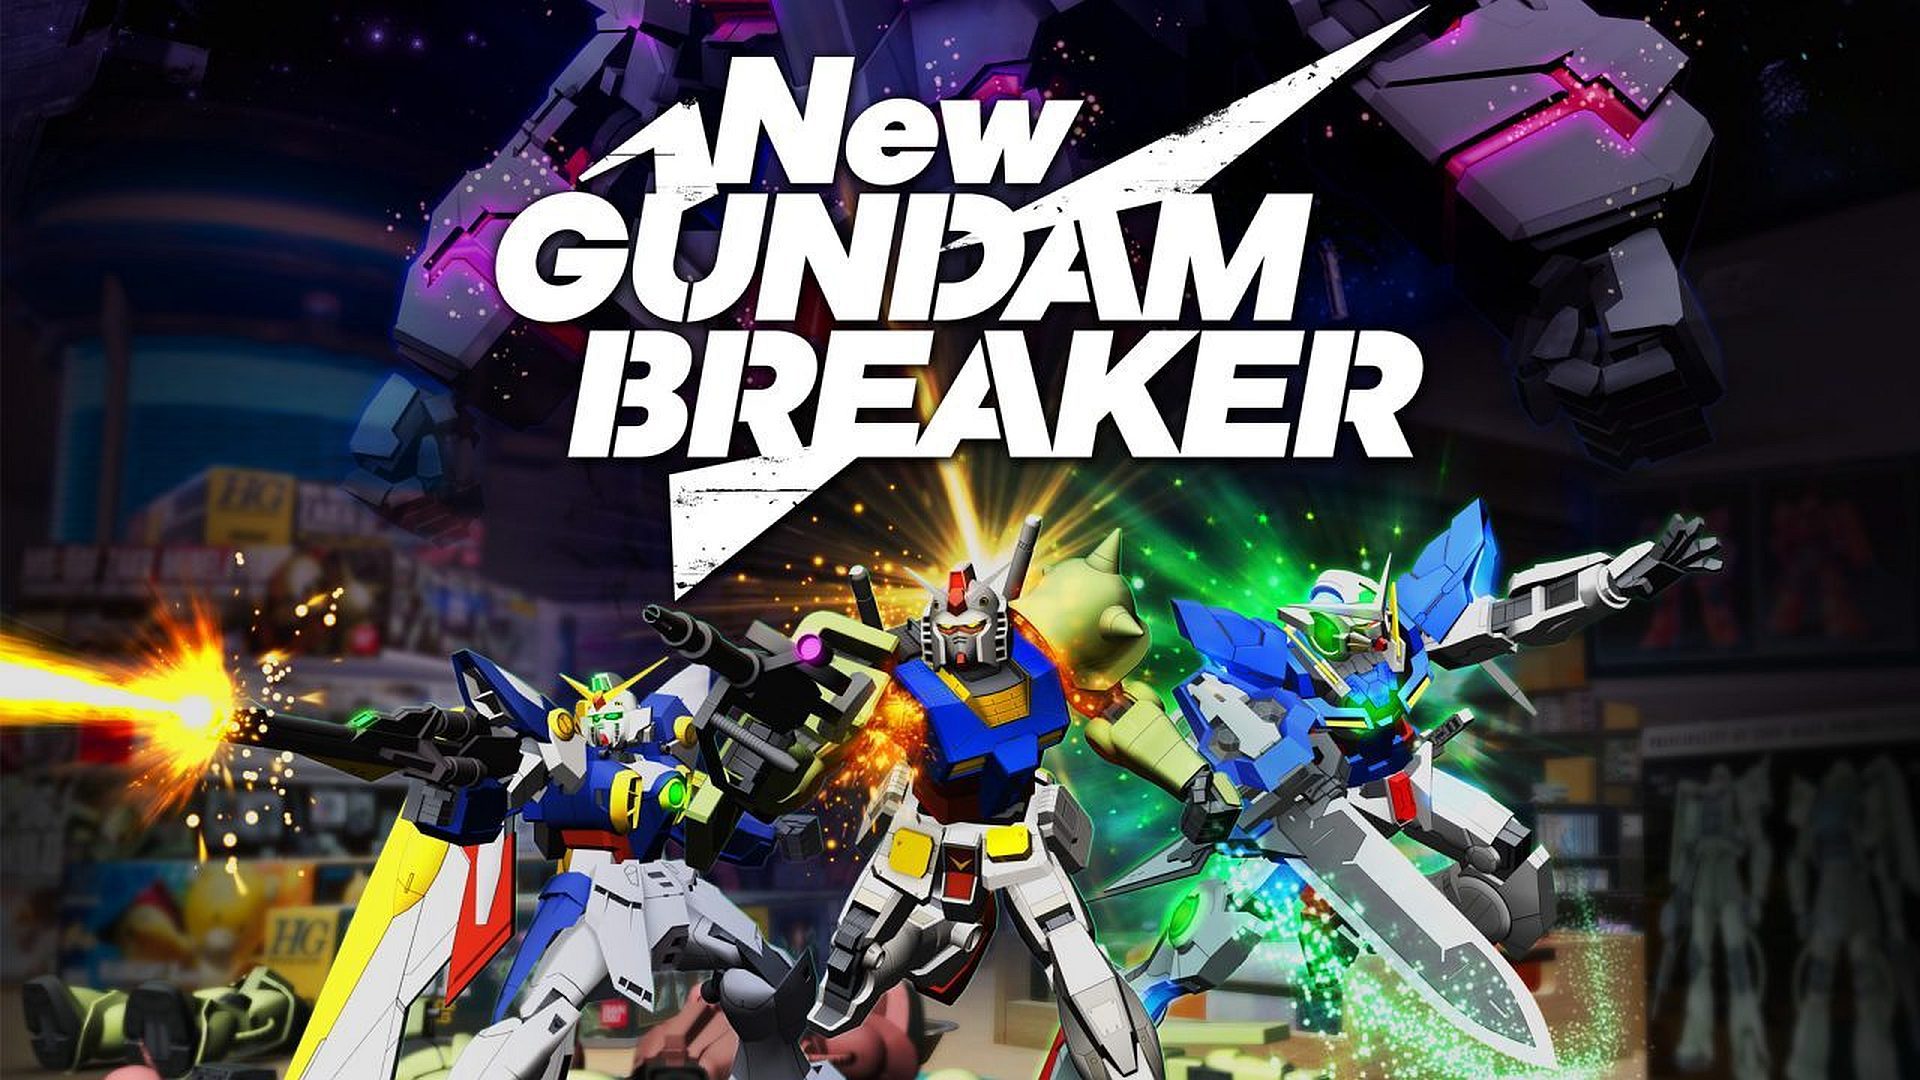 New Gundam Breaker hits PC next week